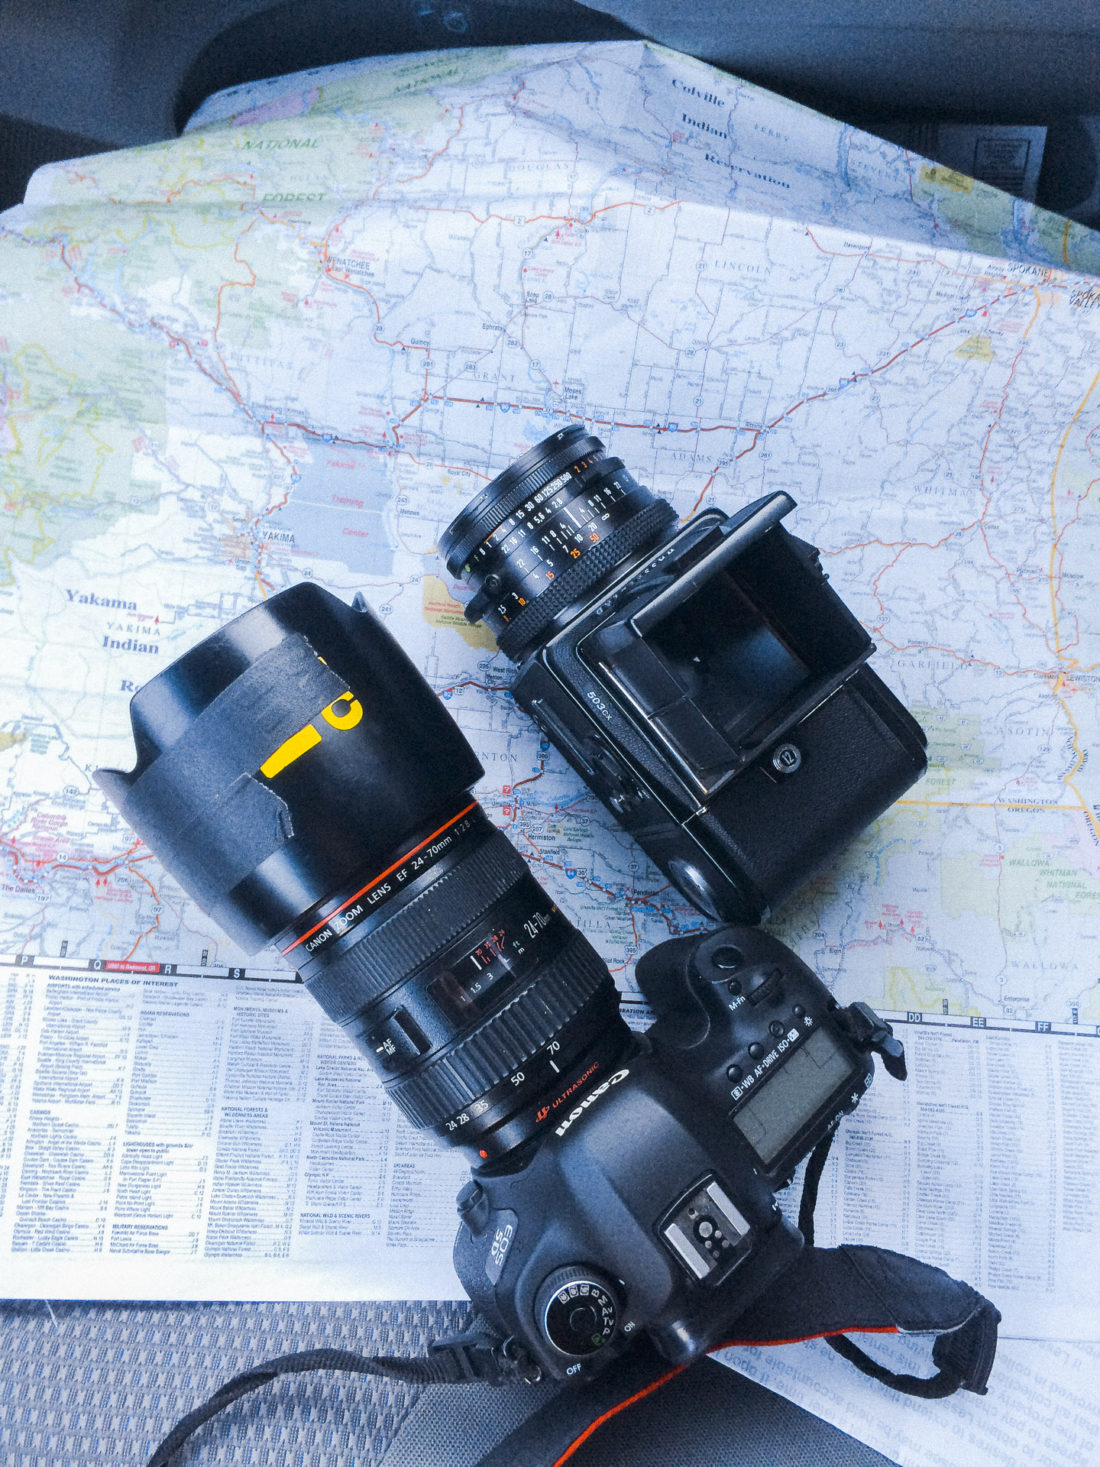 Gear List: Canon 5D MKIII, Hasseblad 503cx, Map.